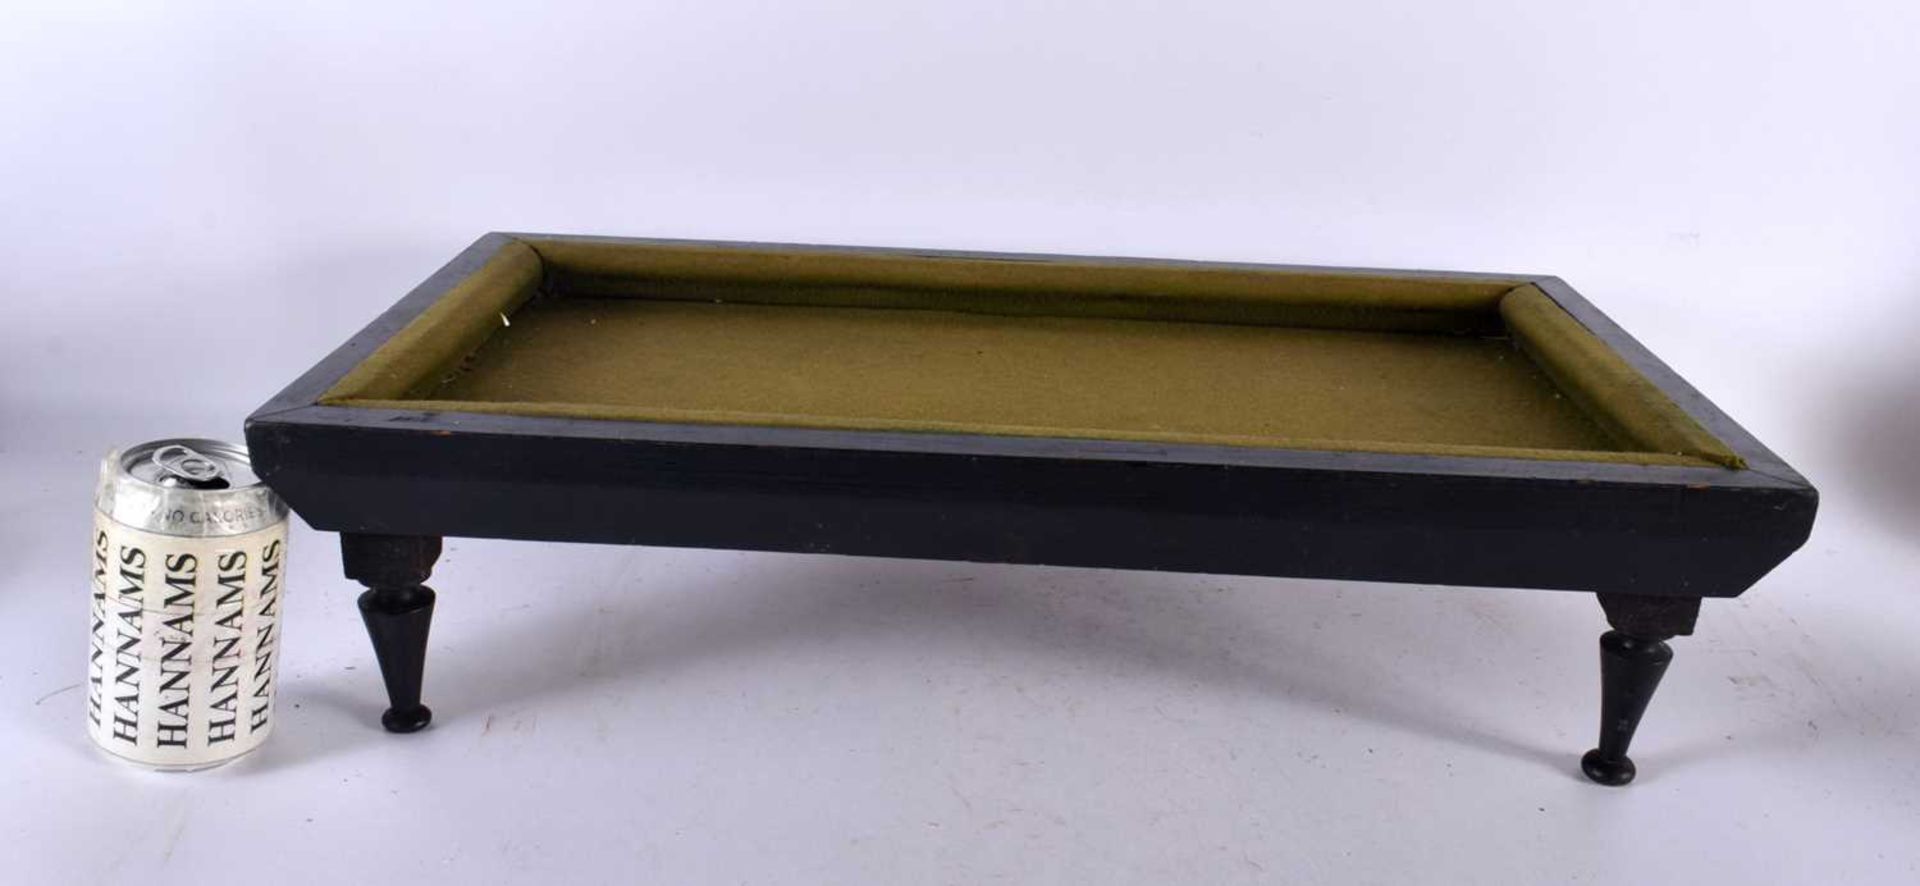 A MINIATURE BILLIARD TABLE. 55 cm x 32 cm.